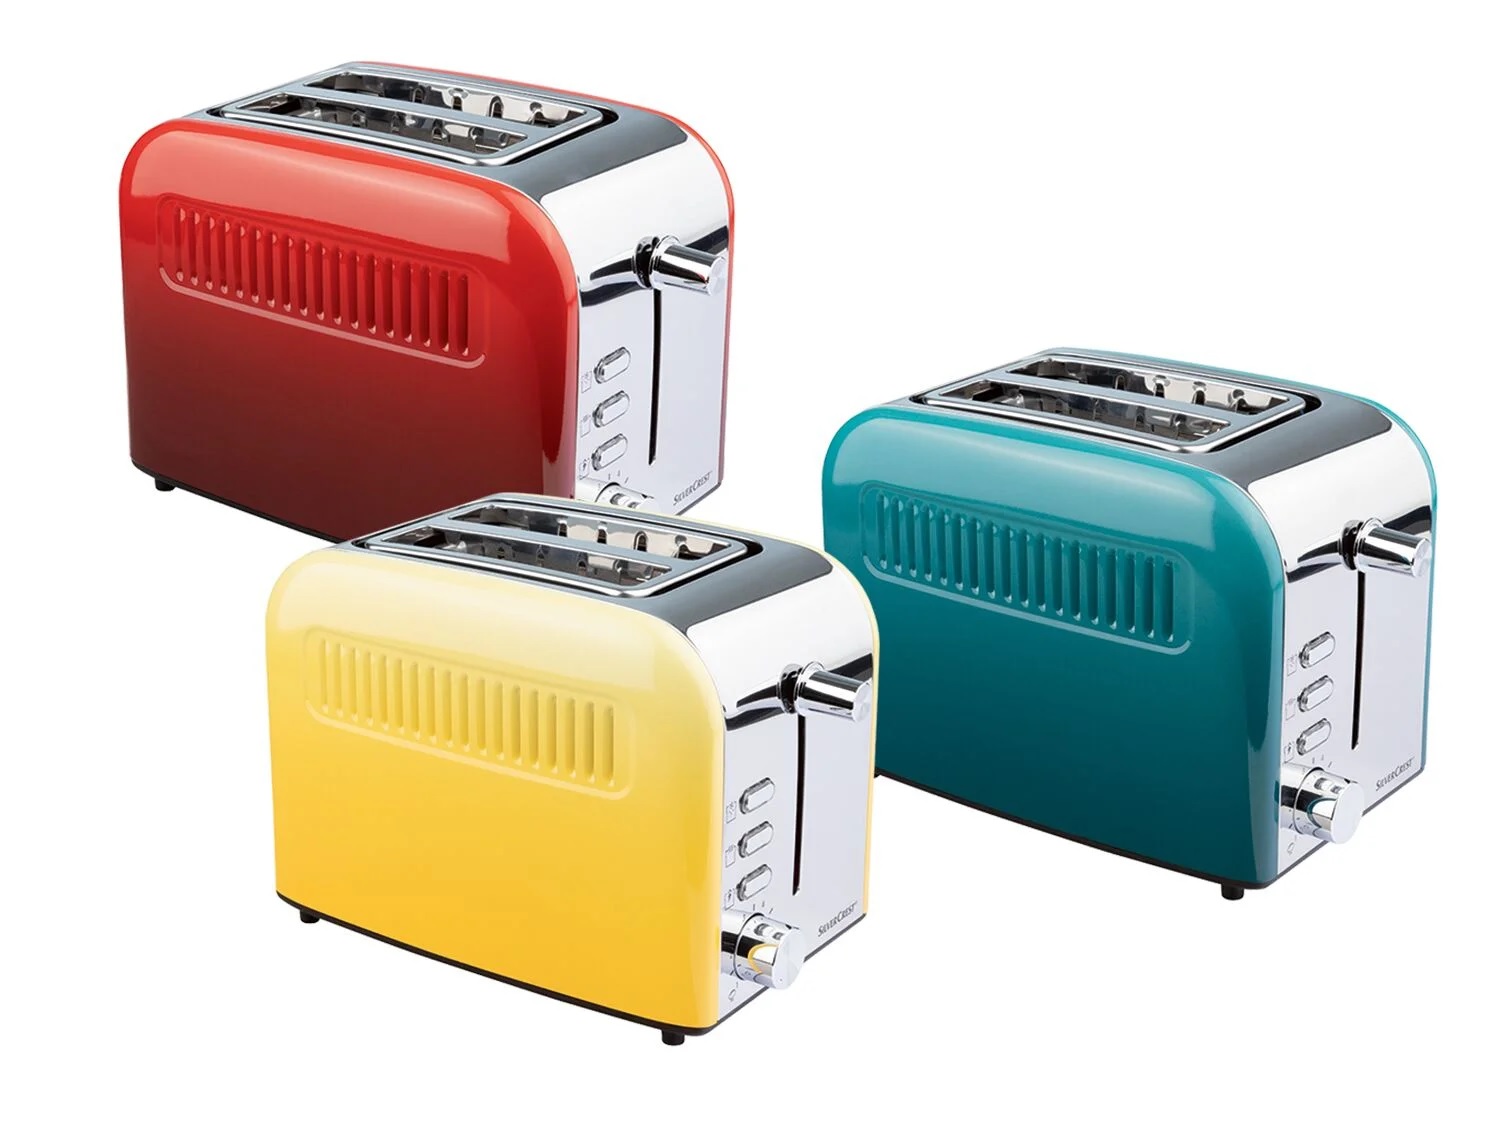 920 W toaster